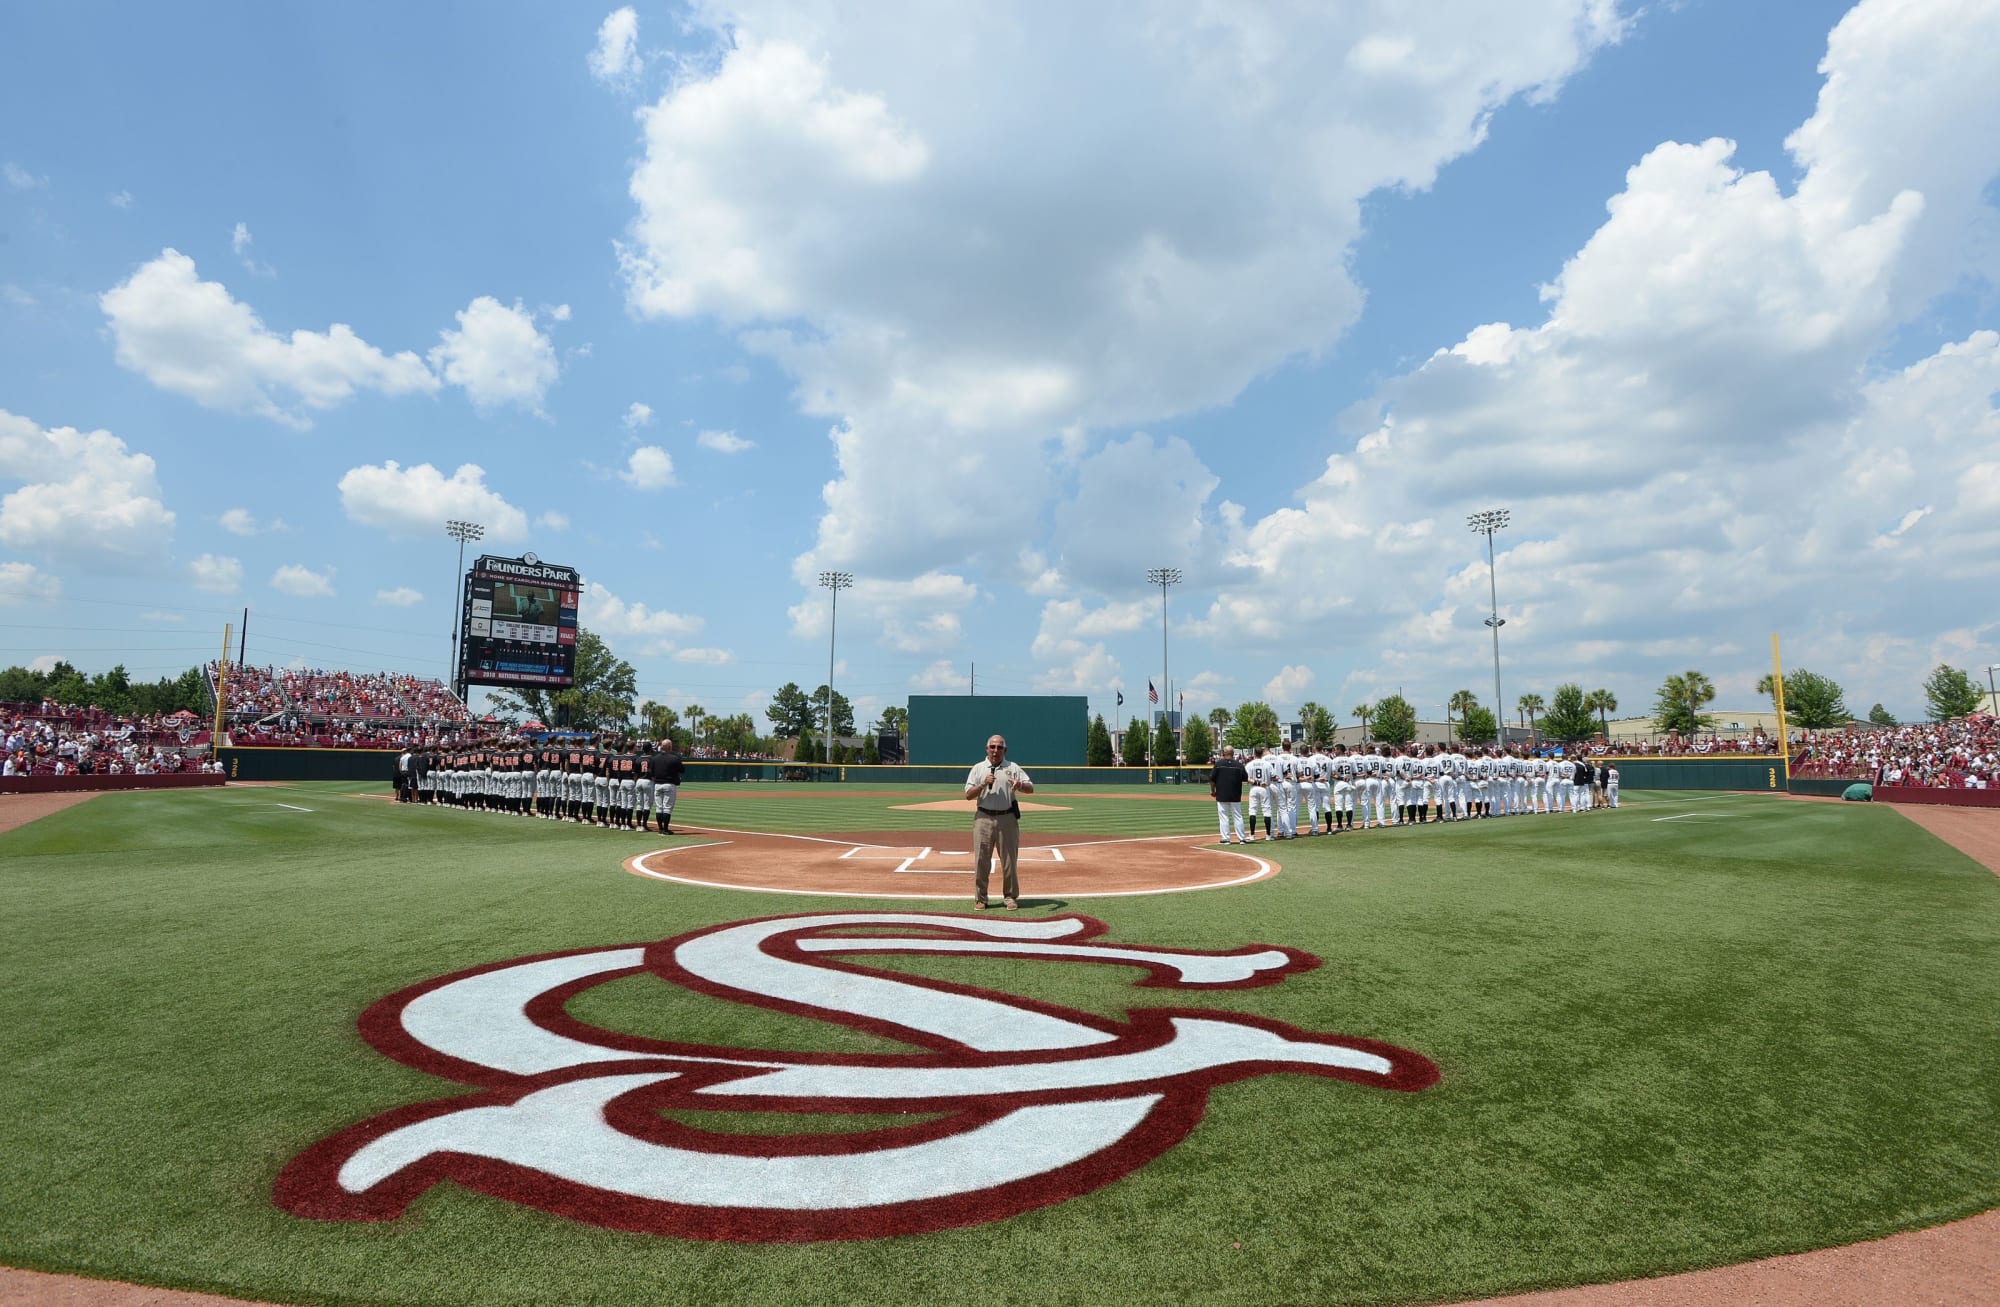 South Carolina baseball evaluating the future of the program